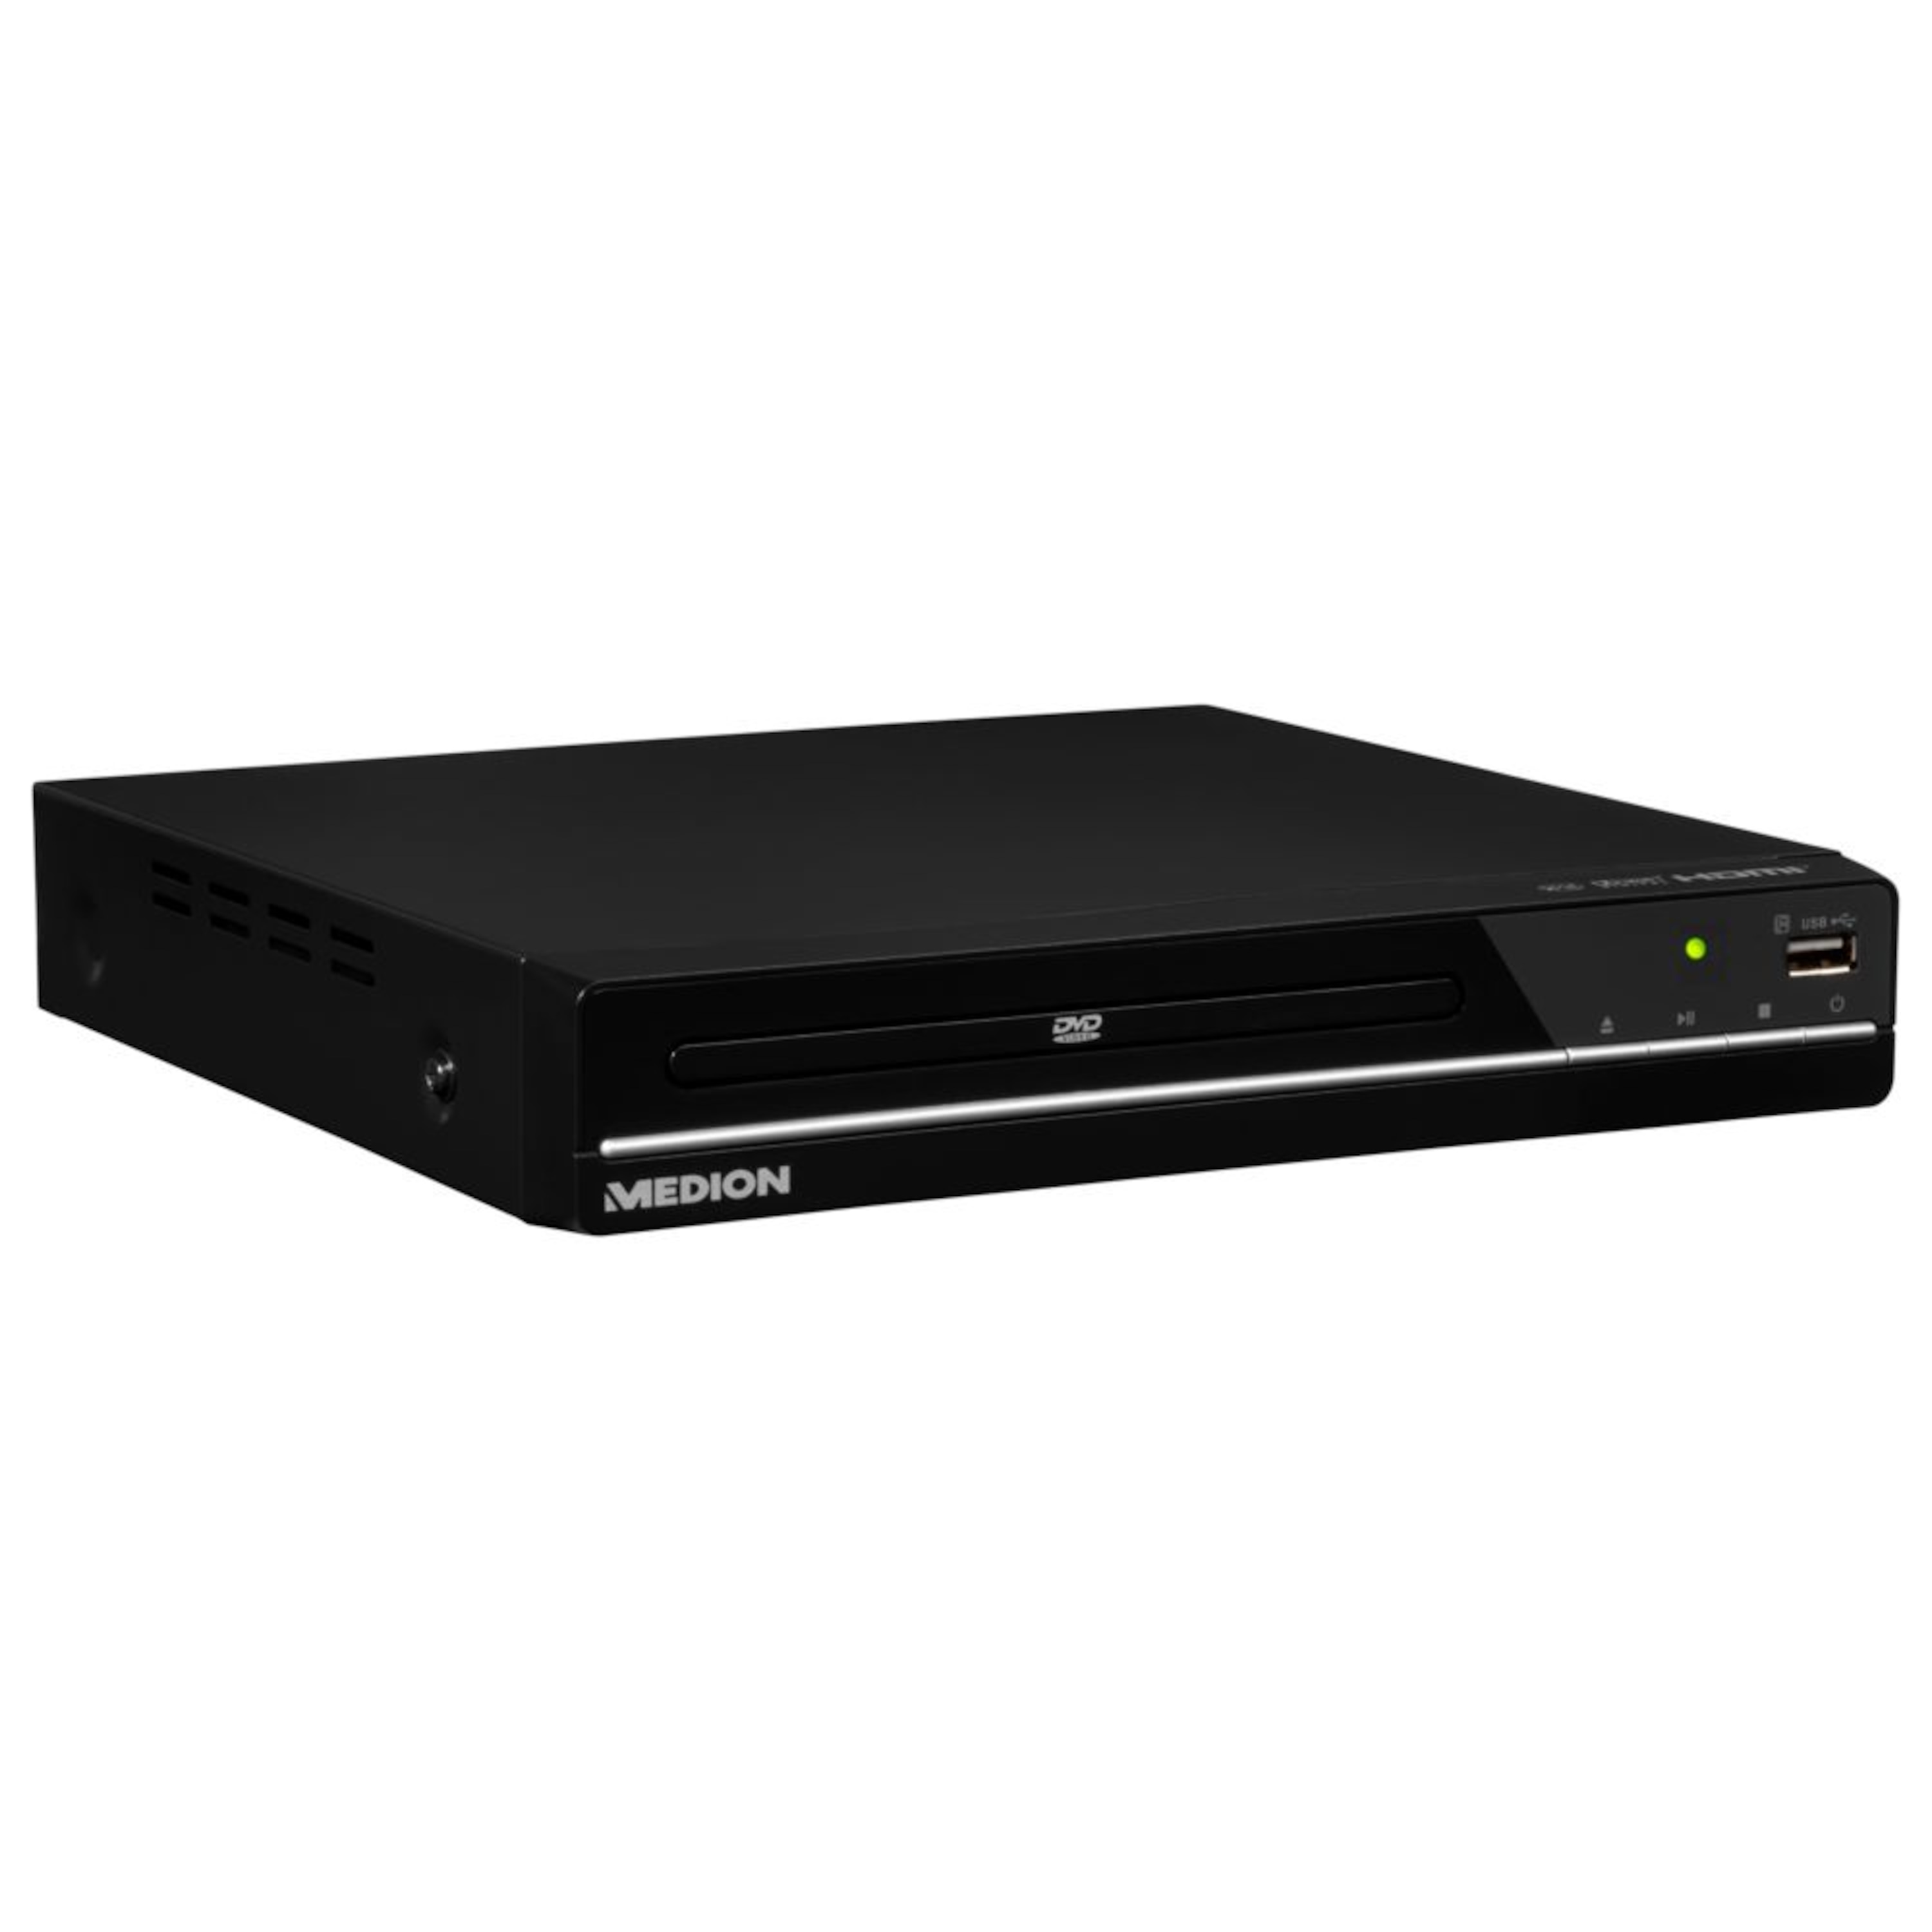 MEDION® LIFE® E71021 DVD-Player, HDMI, USB, Xvid und MPEG4 kompatibel, mehrsprachiges OSD (On Screen Display)  (B-Ware)